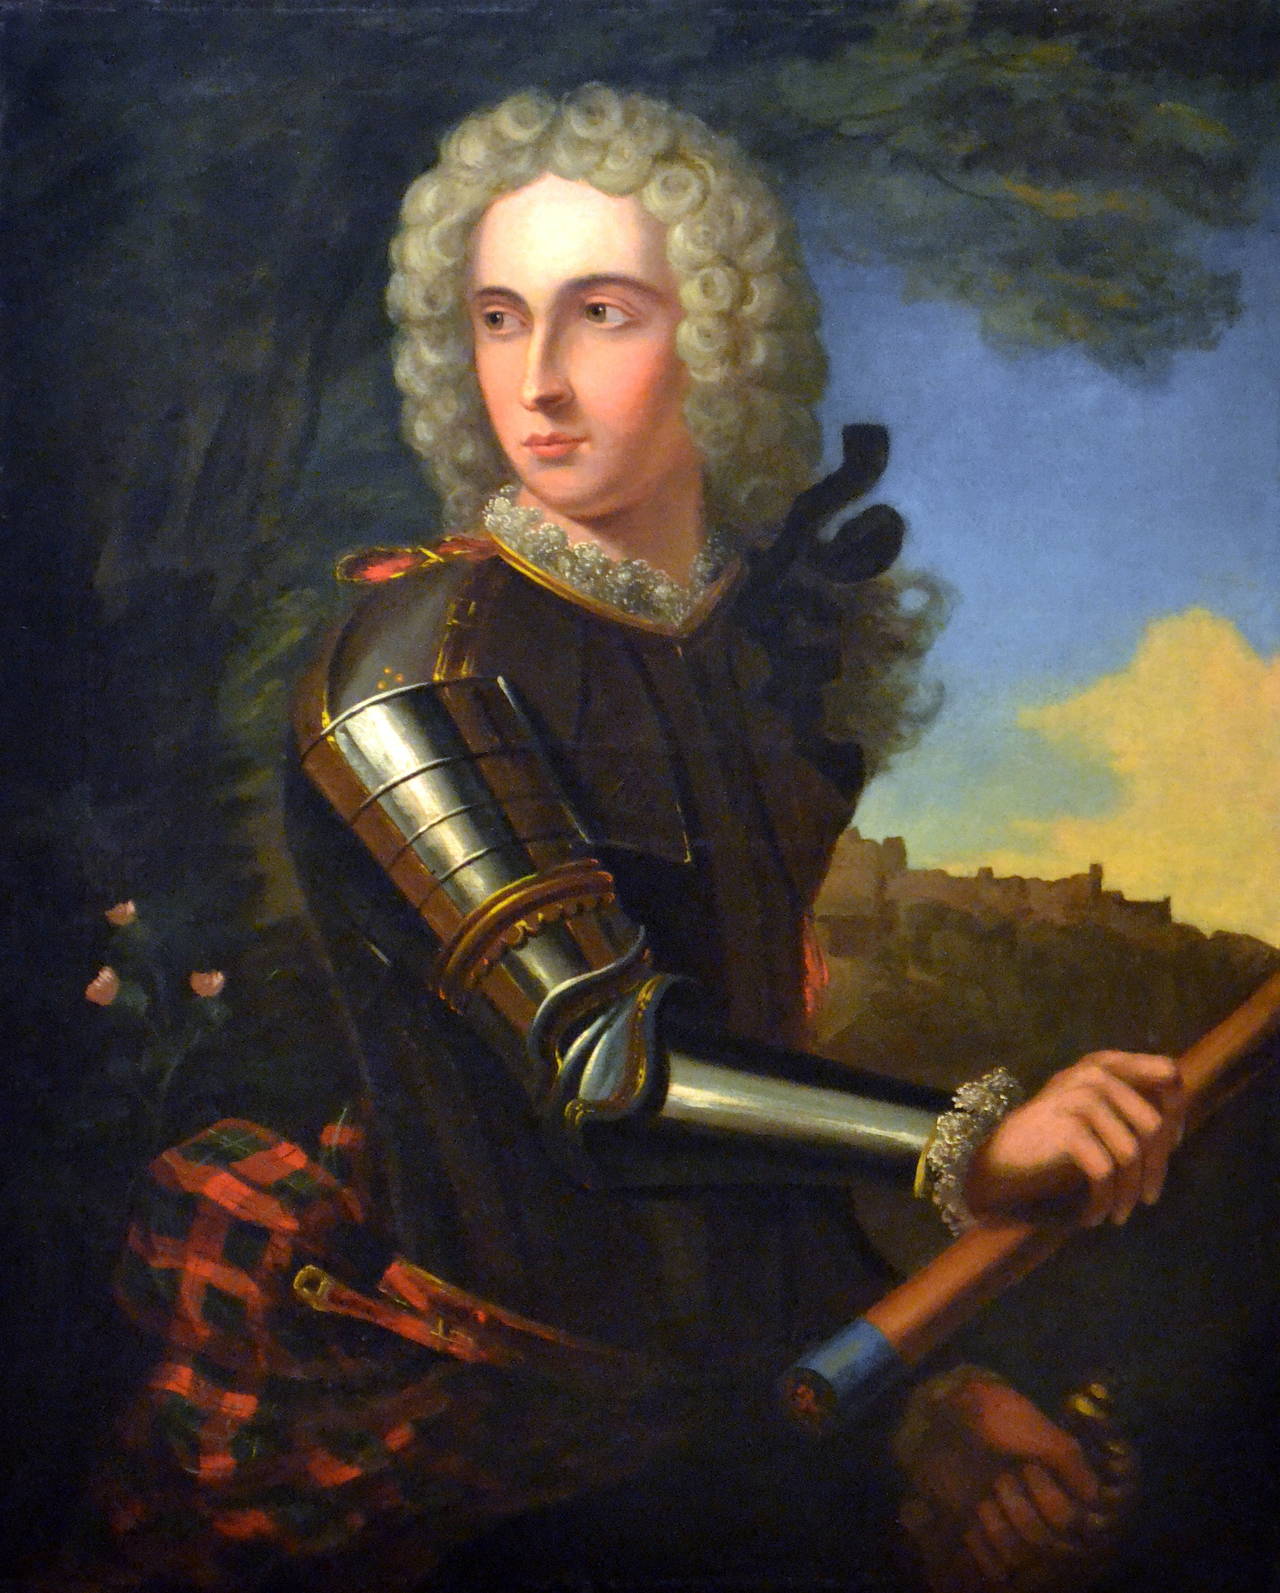 Unknown Portrait Painting - Portrait of a Gentleman Wearing Armor